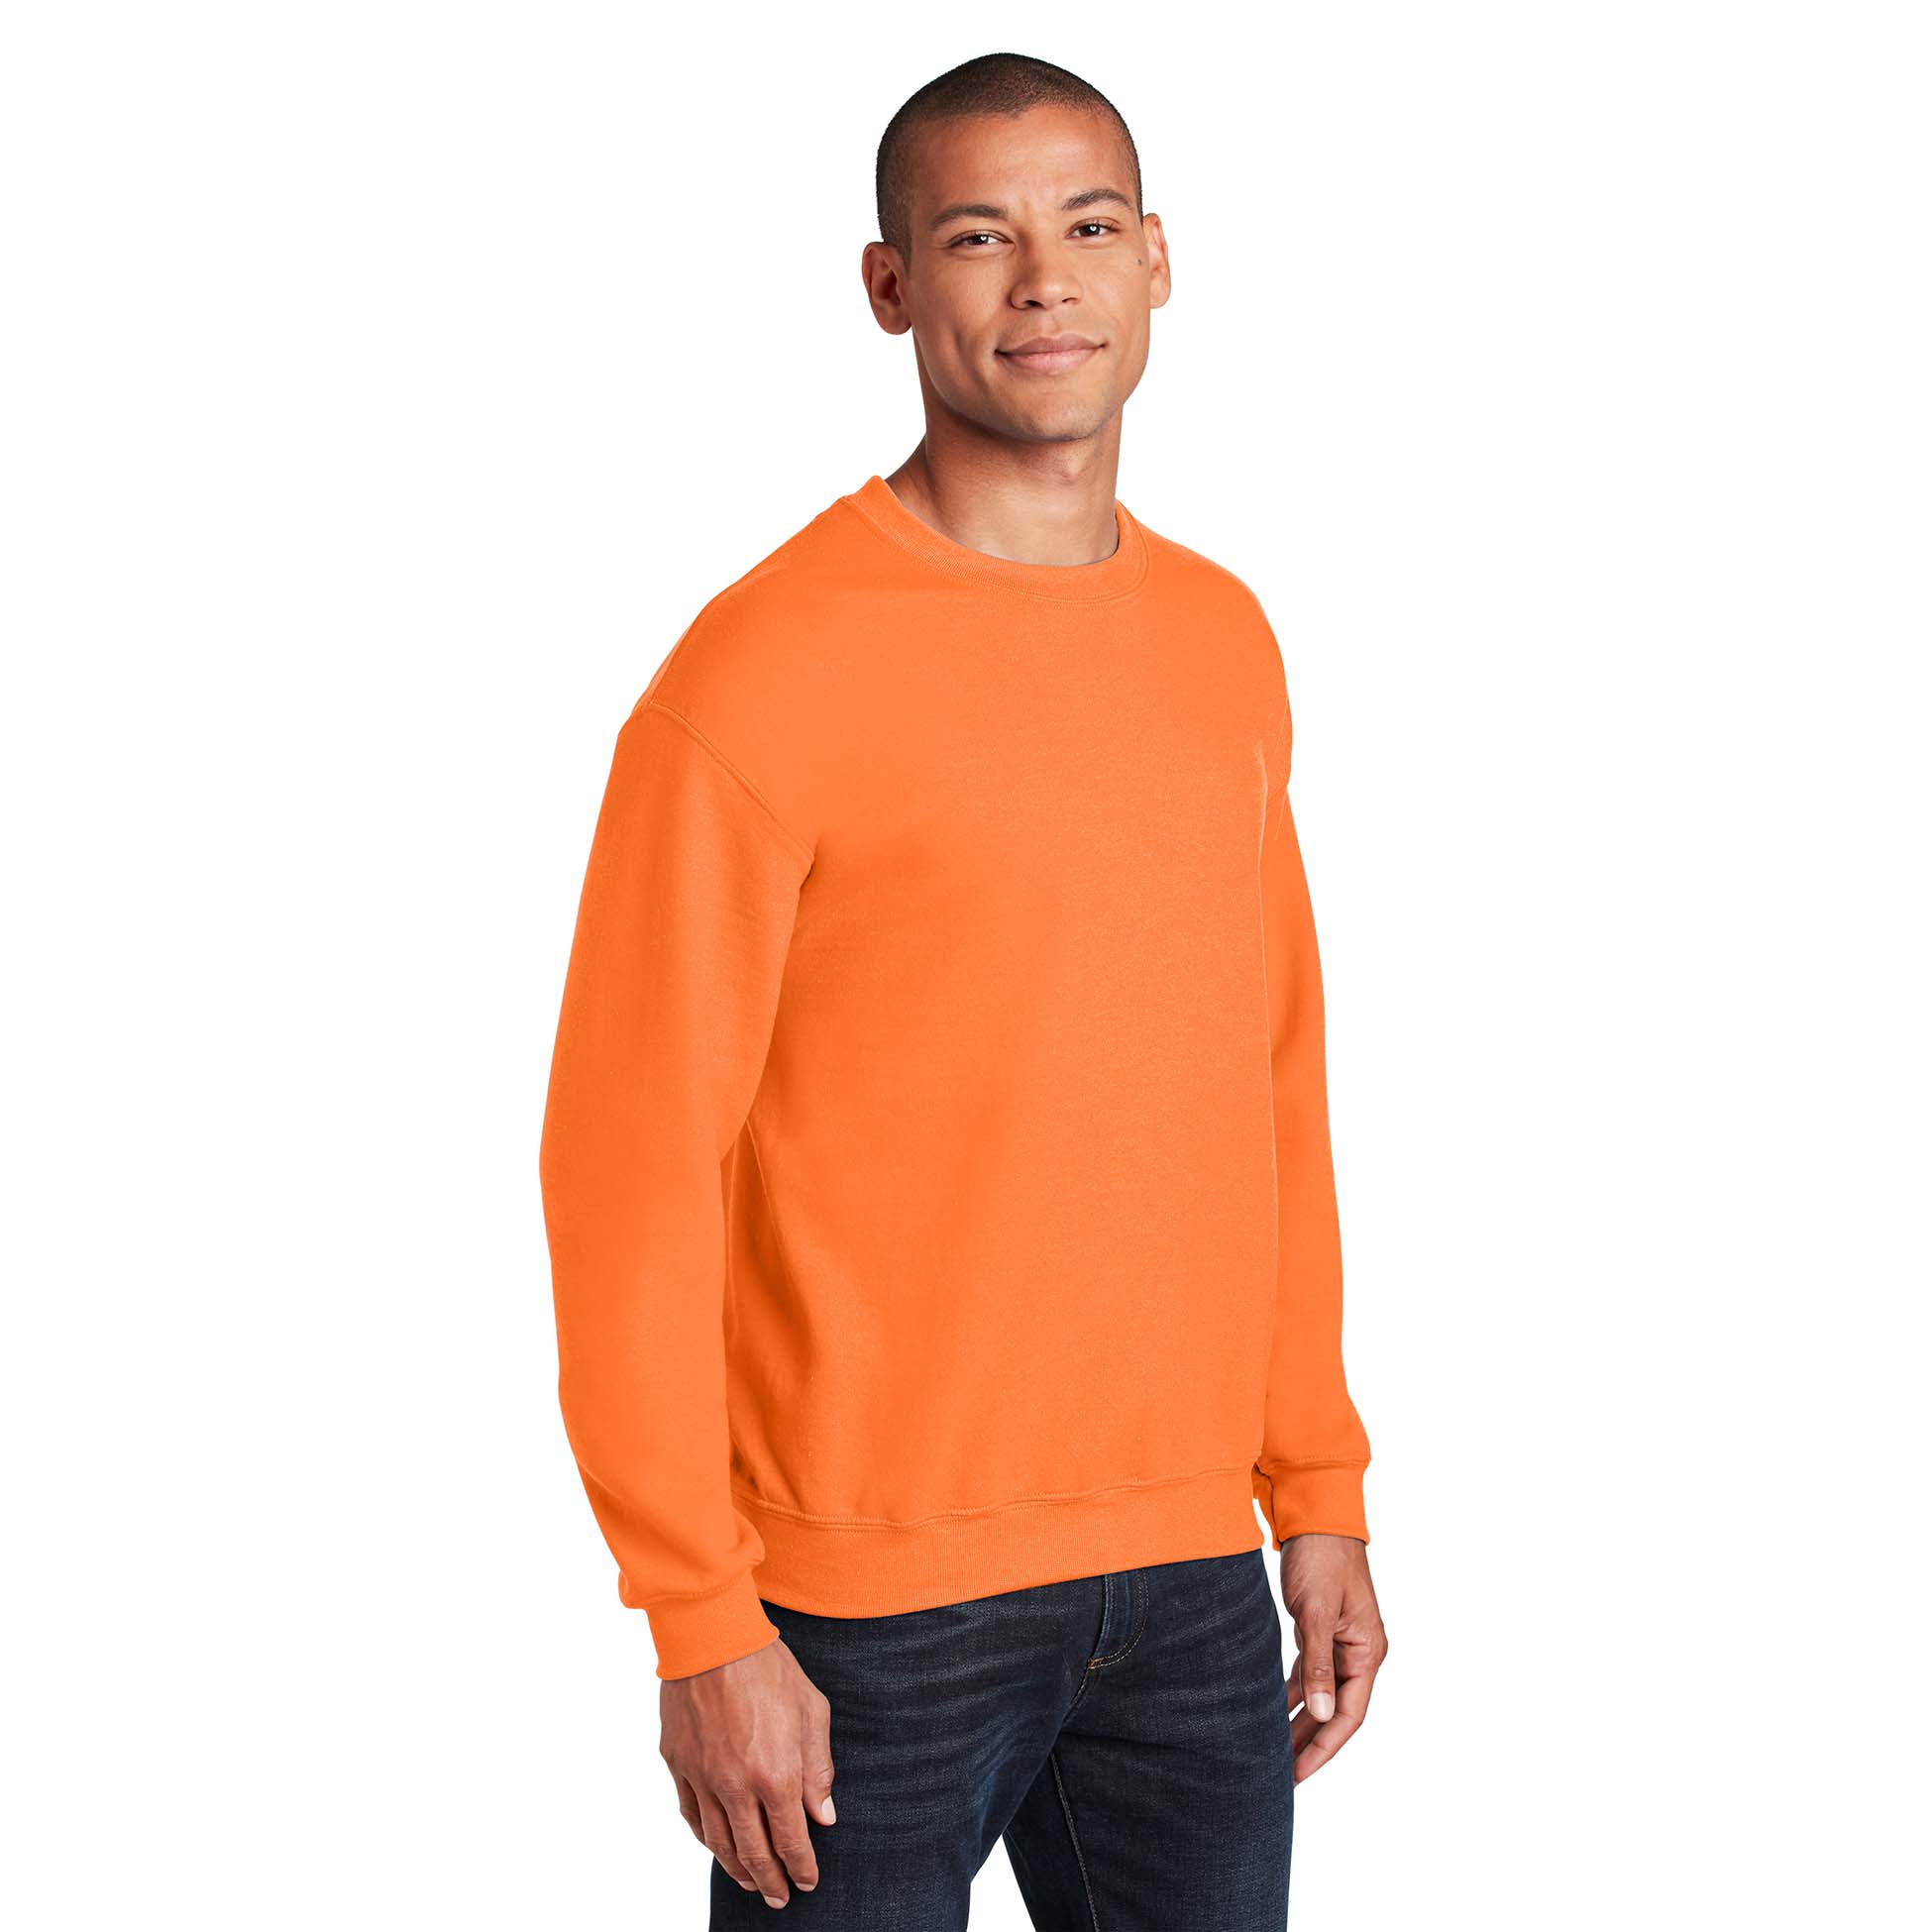 Gildan 18000 Heavy Blend Crewneck Sweatshirt - S. Orange